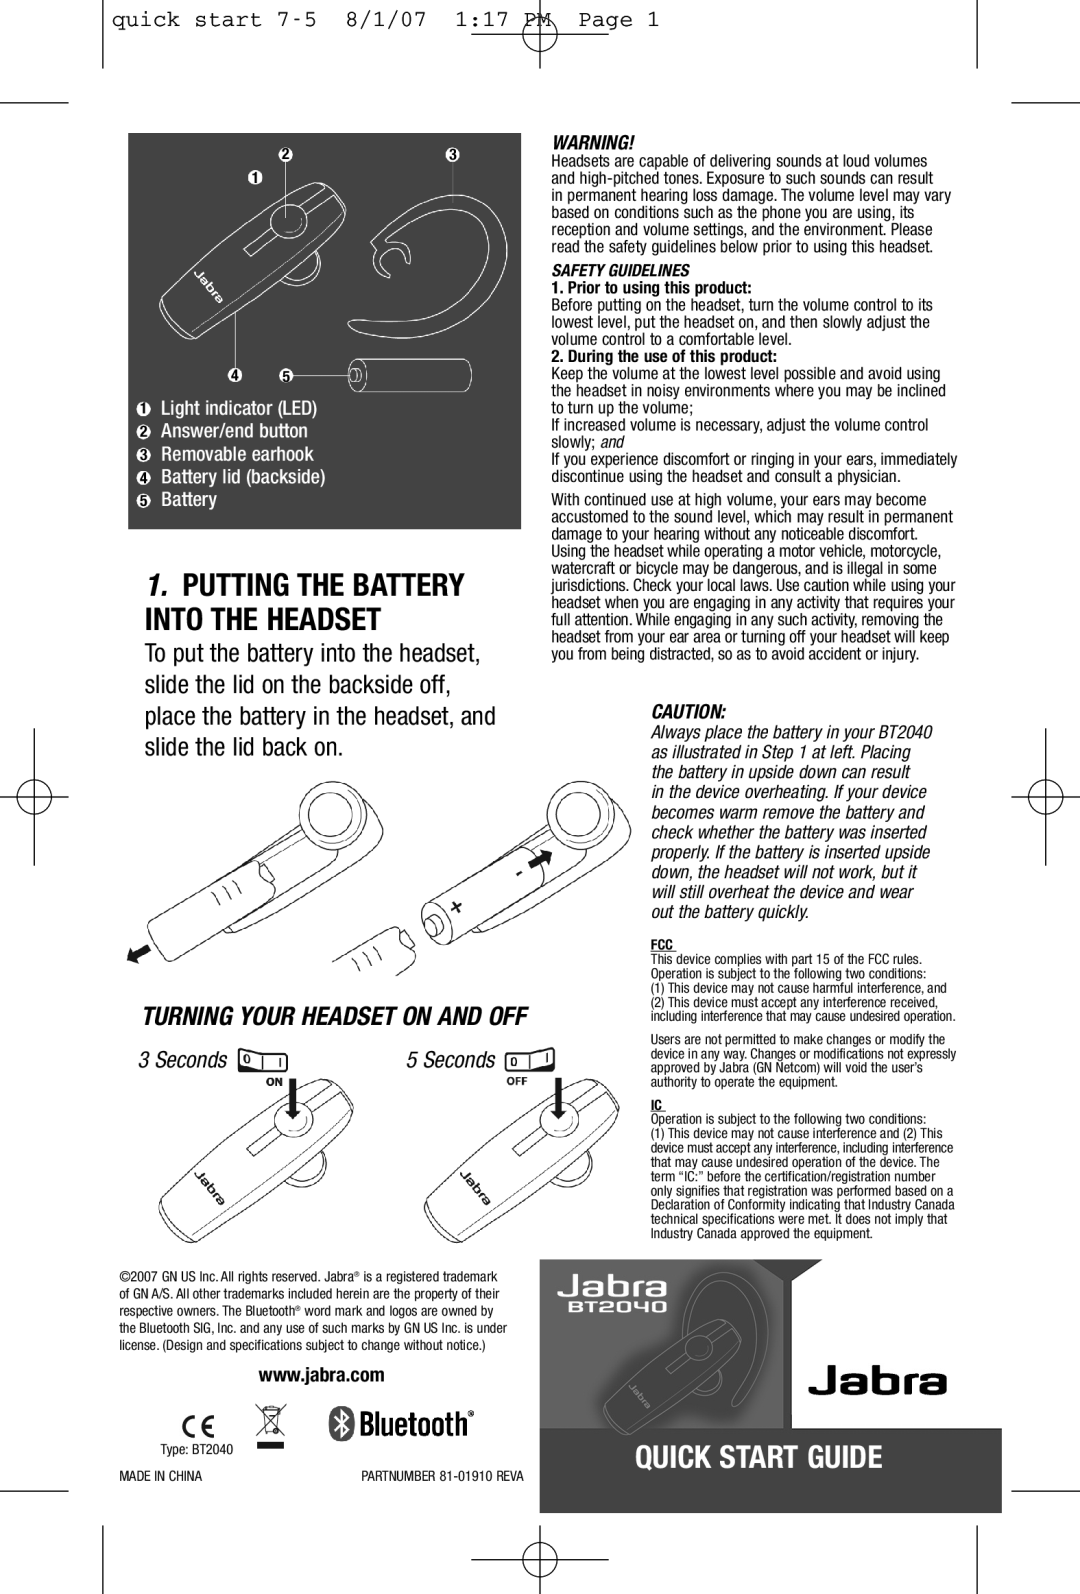 Jabra BT2040 quick start Putting The Battery Into The Headset, Quick Start Guide, quick start 7-58/1/07 1 17 PM Page 